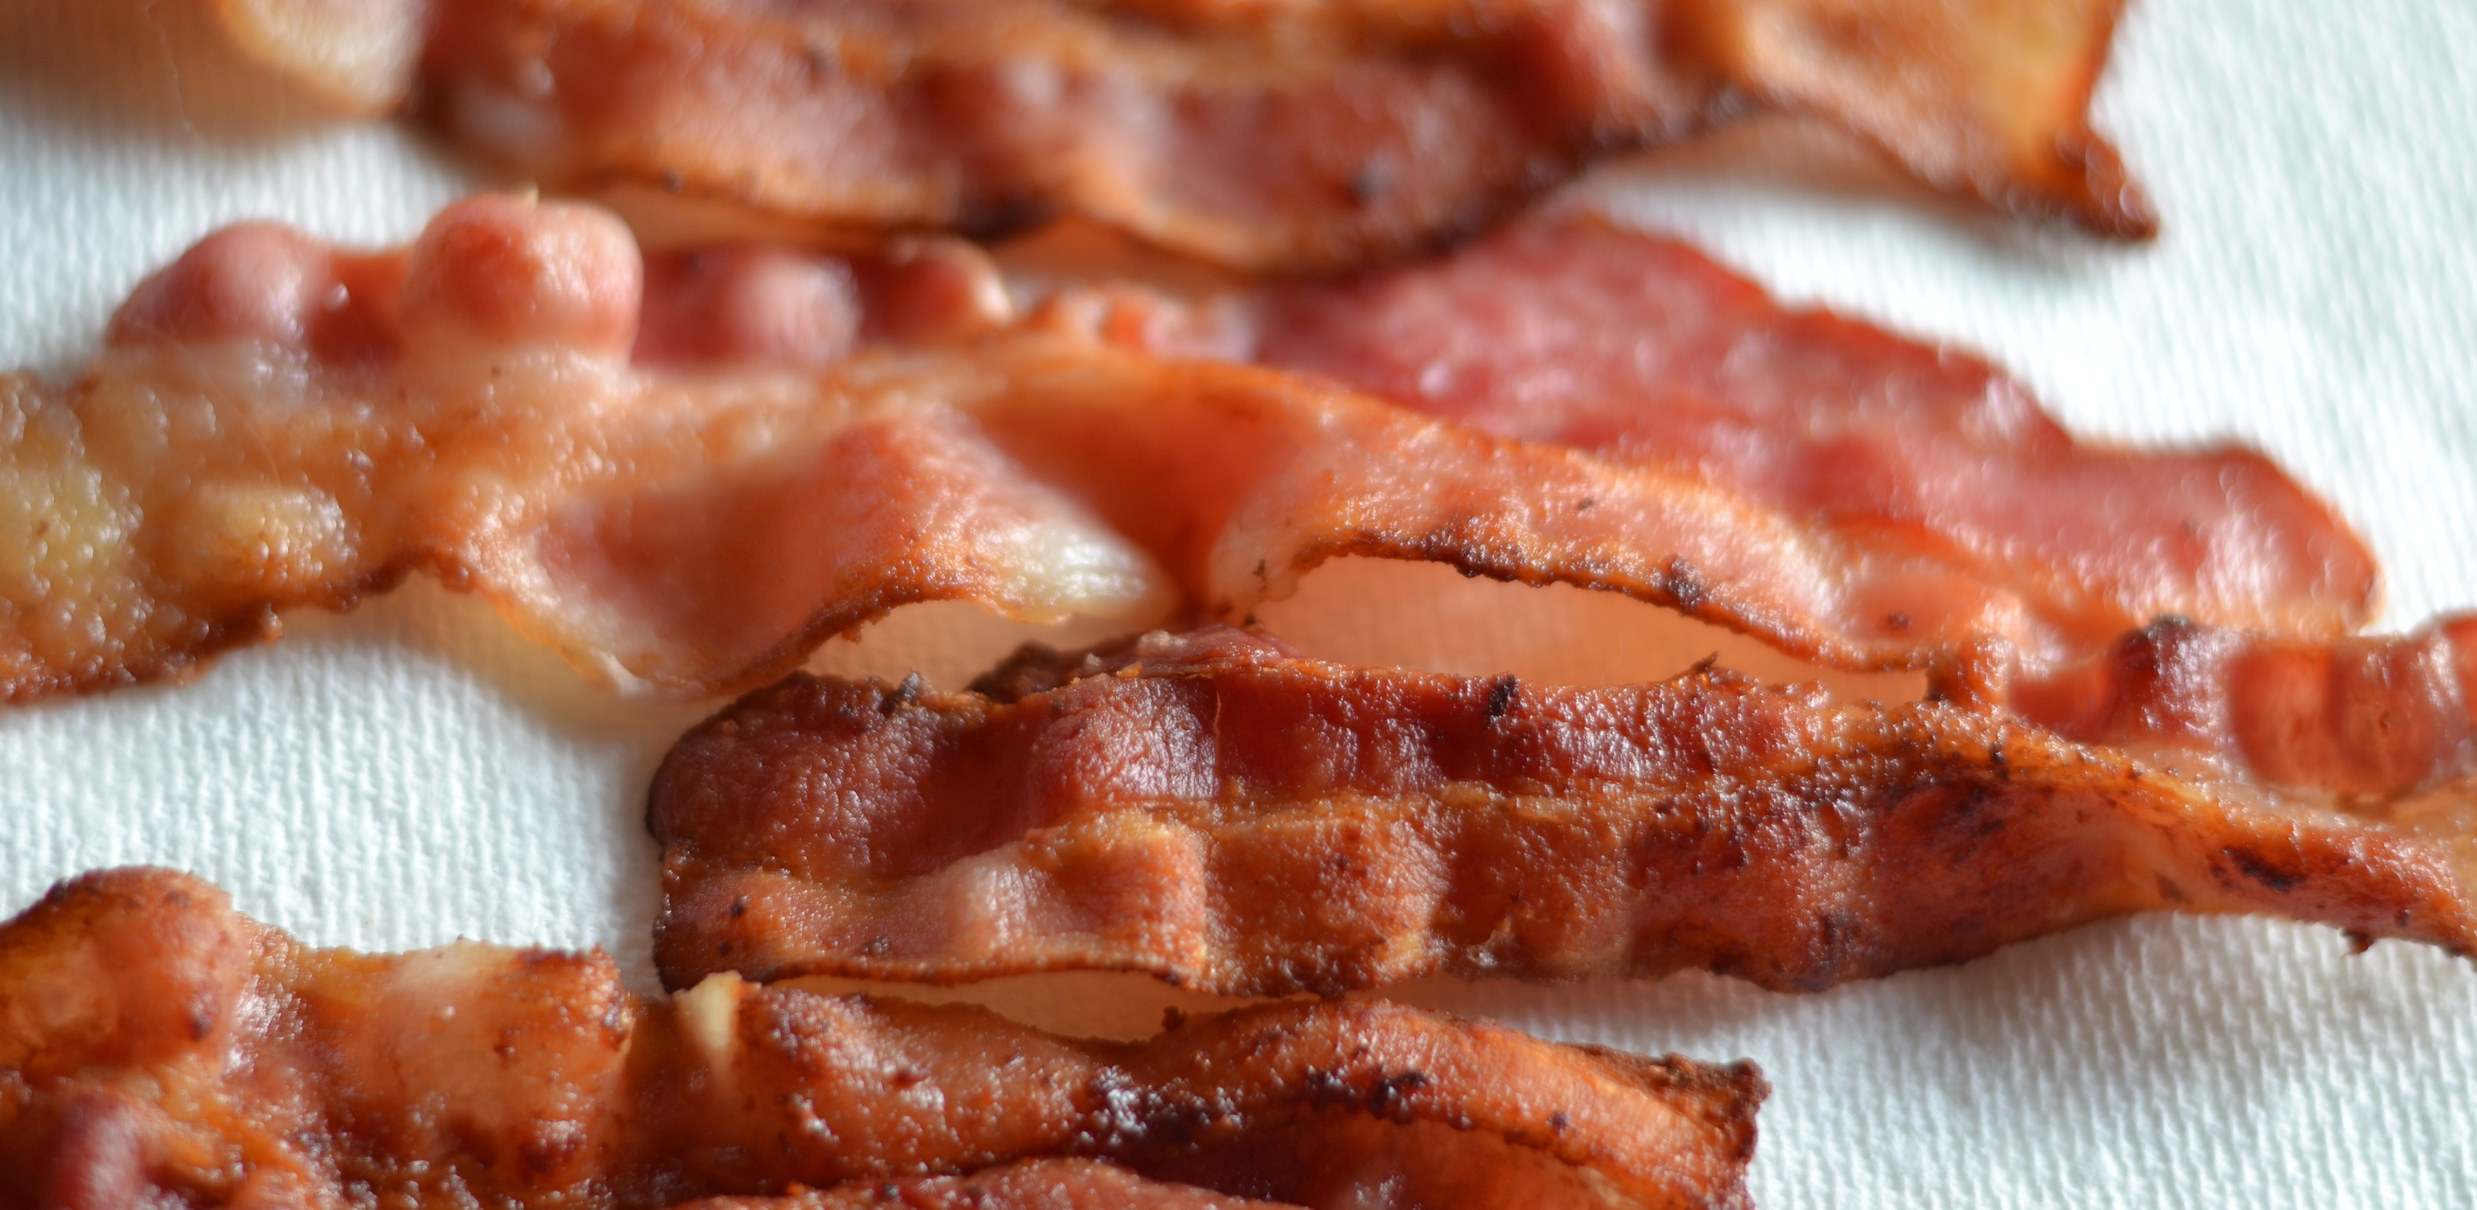 Crispy bacon on a paper towel.